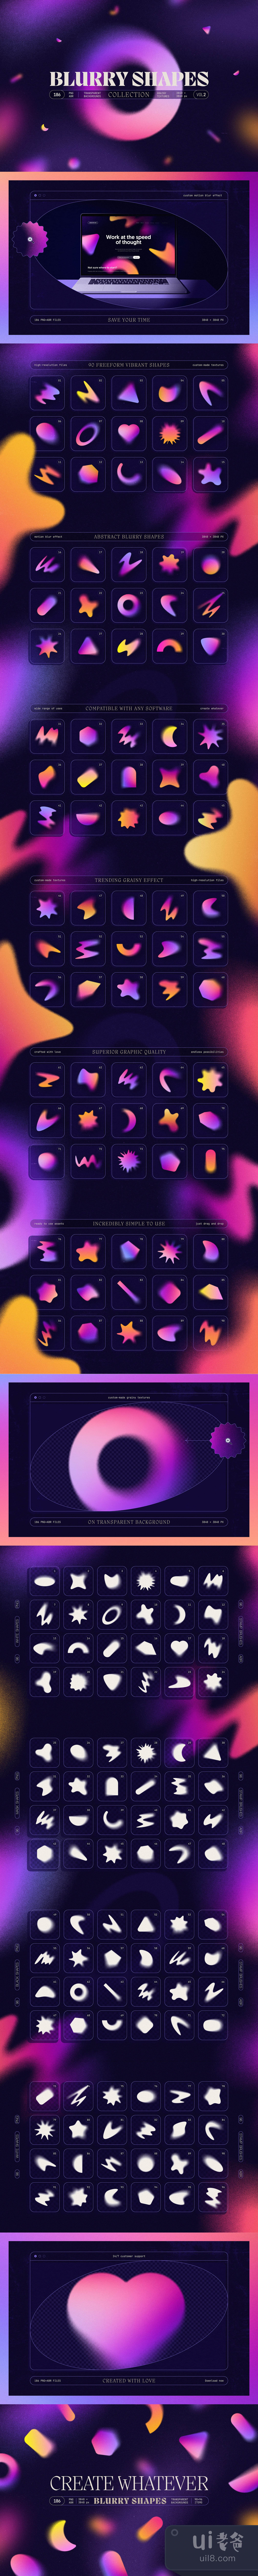 模糊的梯度形状集合 (Blurry gradient shapes collection)插图1